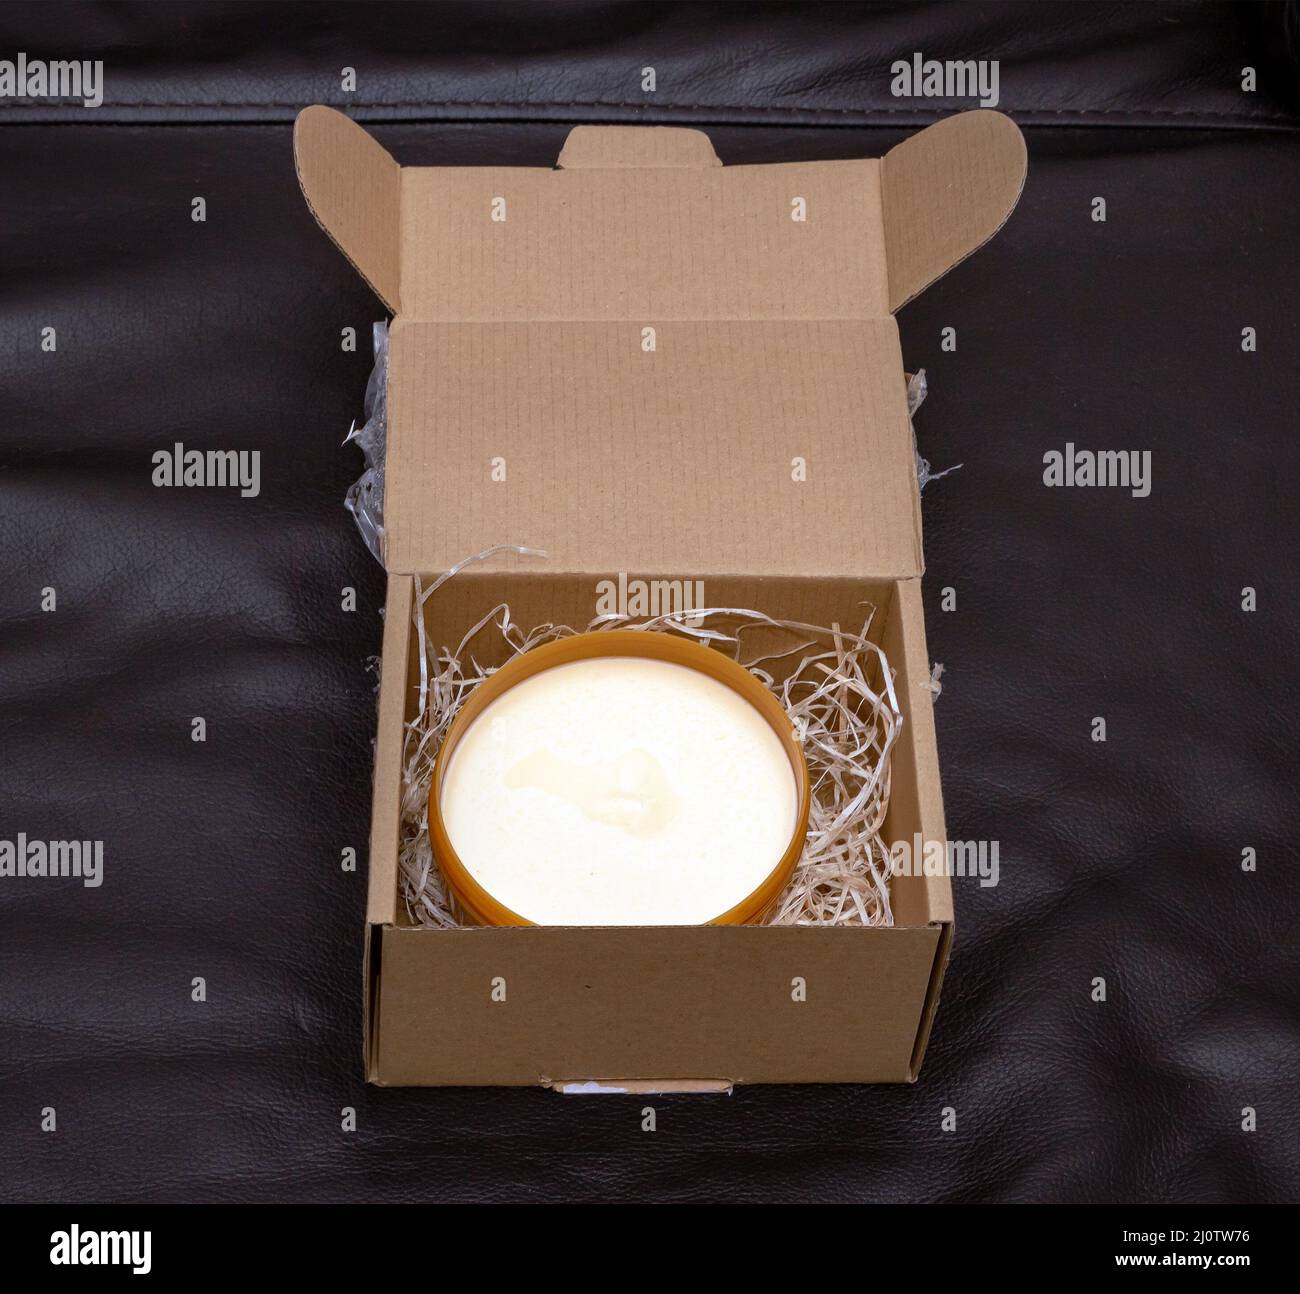 Open body cream inside cardboard package box Stock Photo